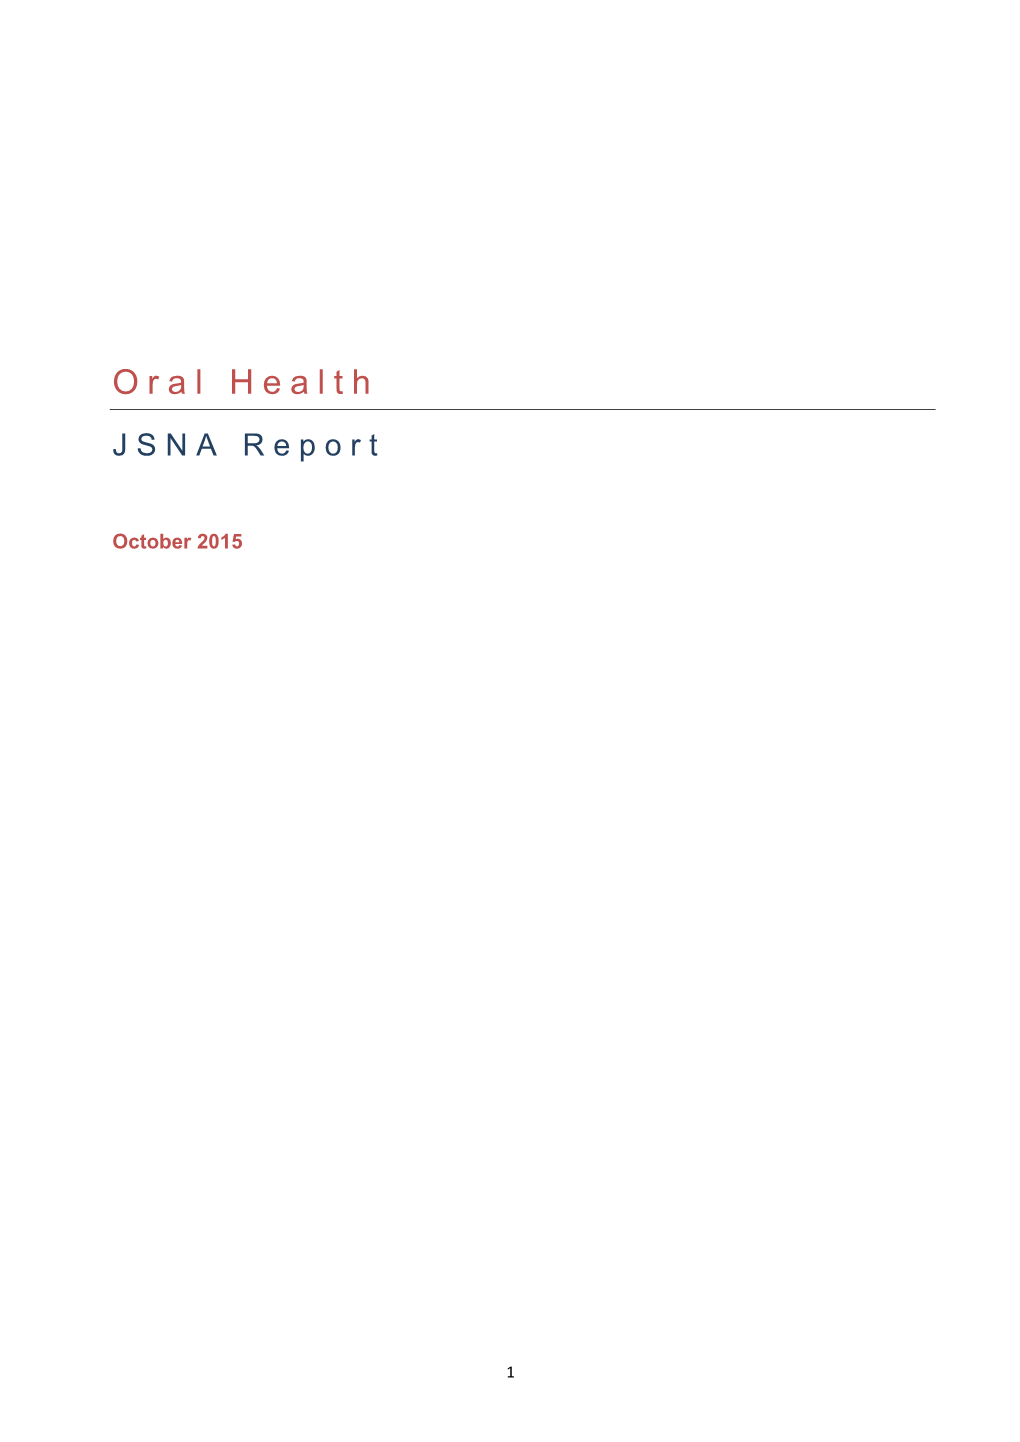 Oral Health JSNA Report